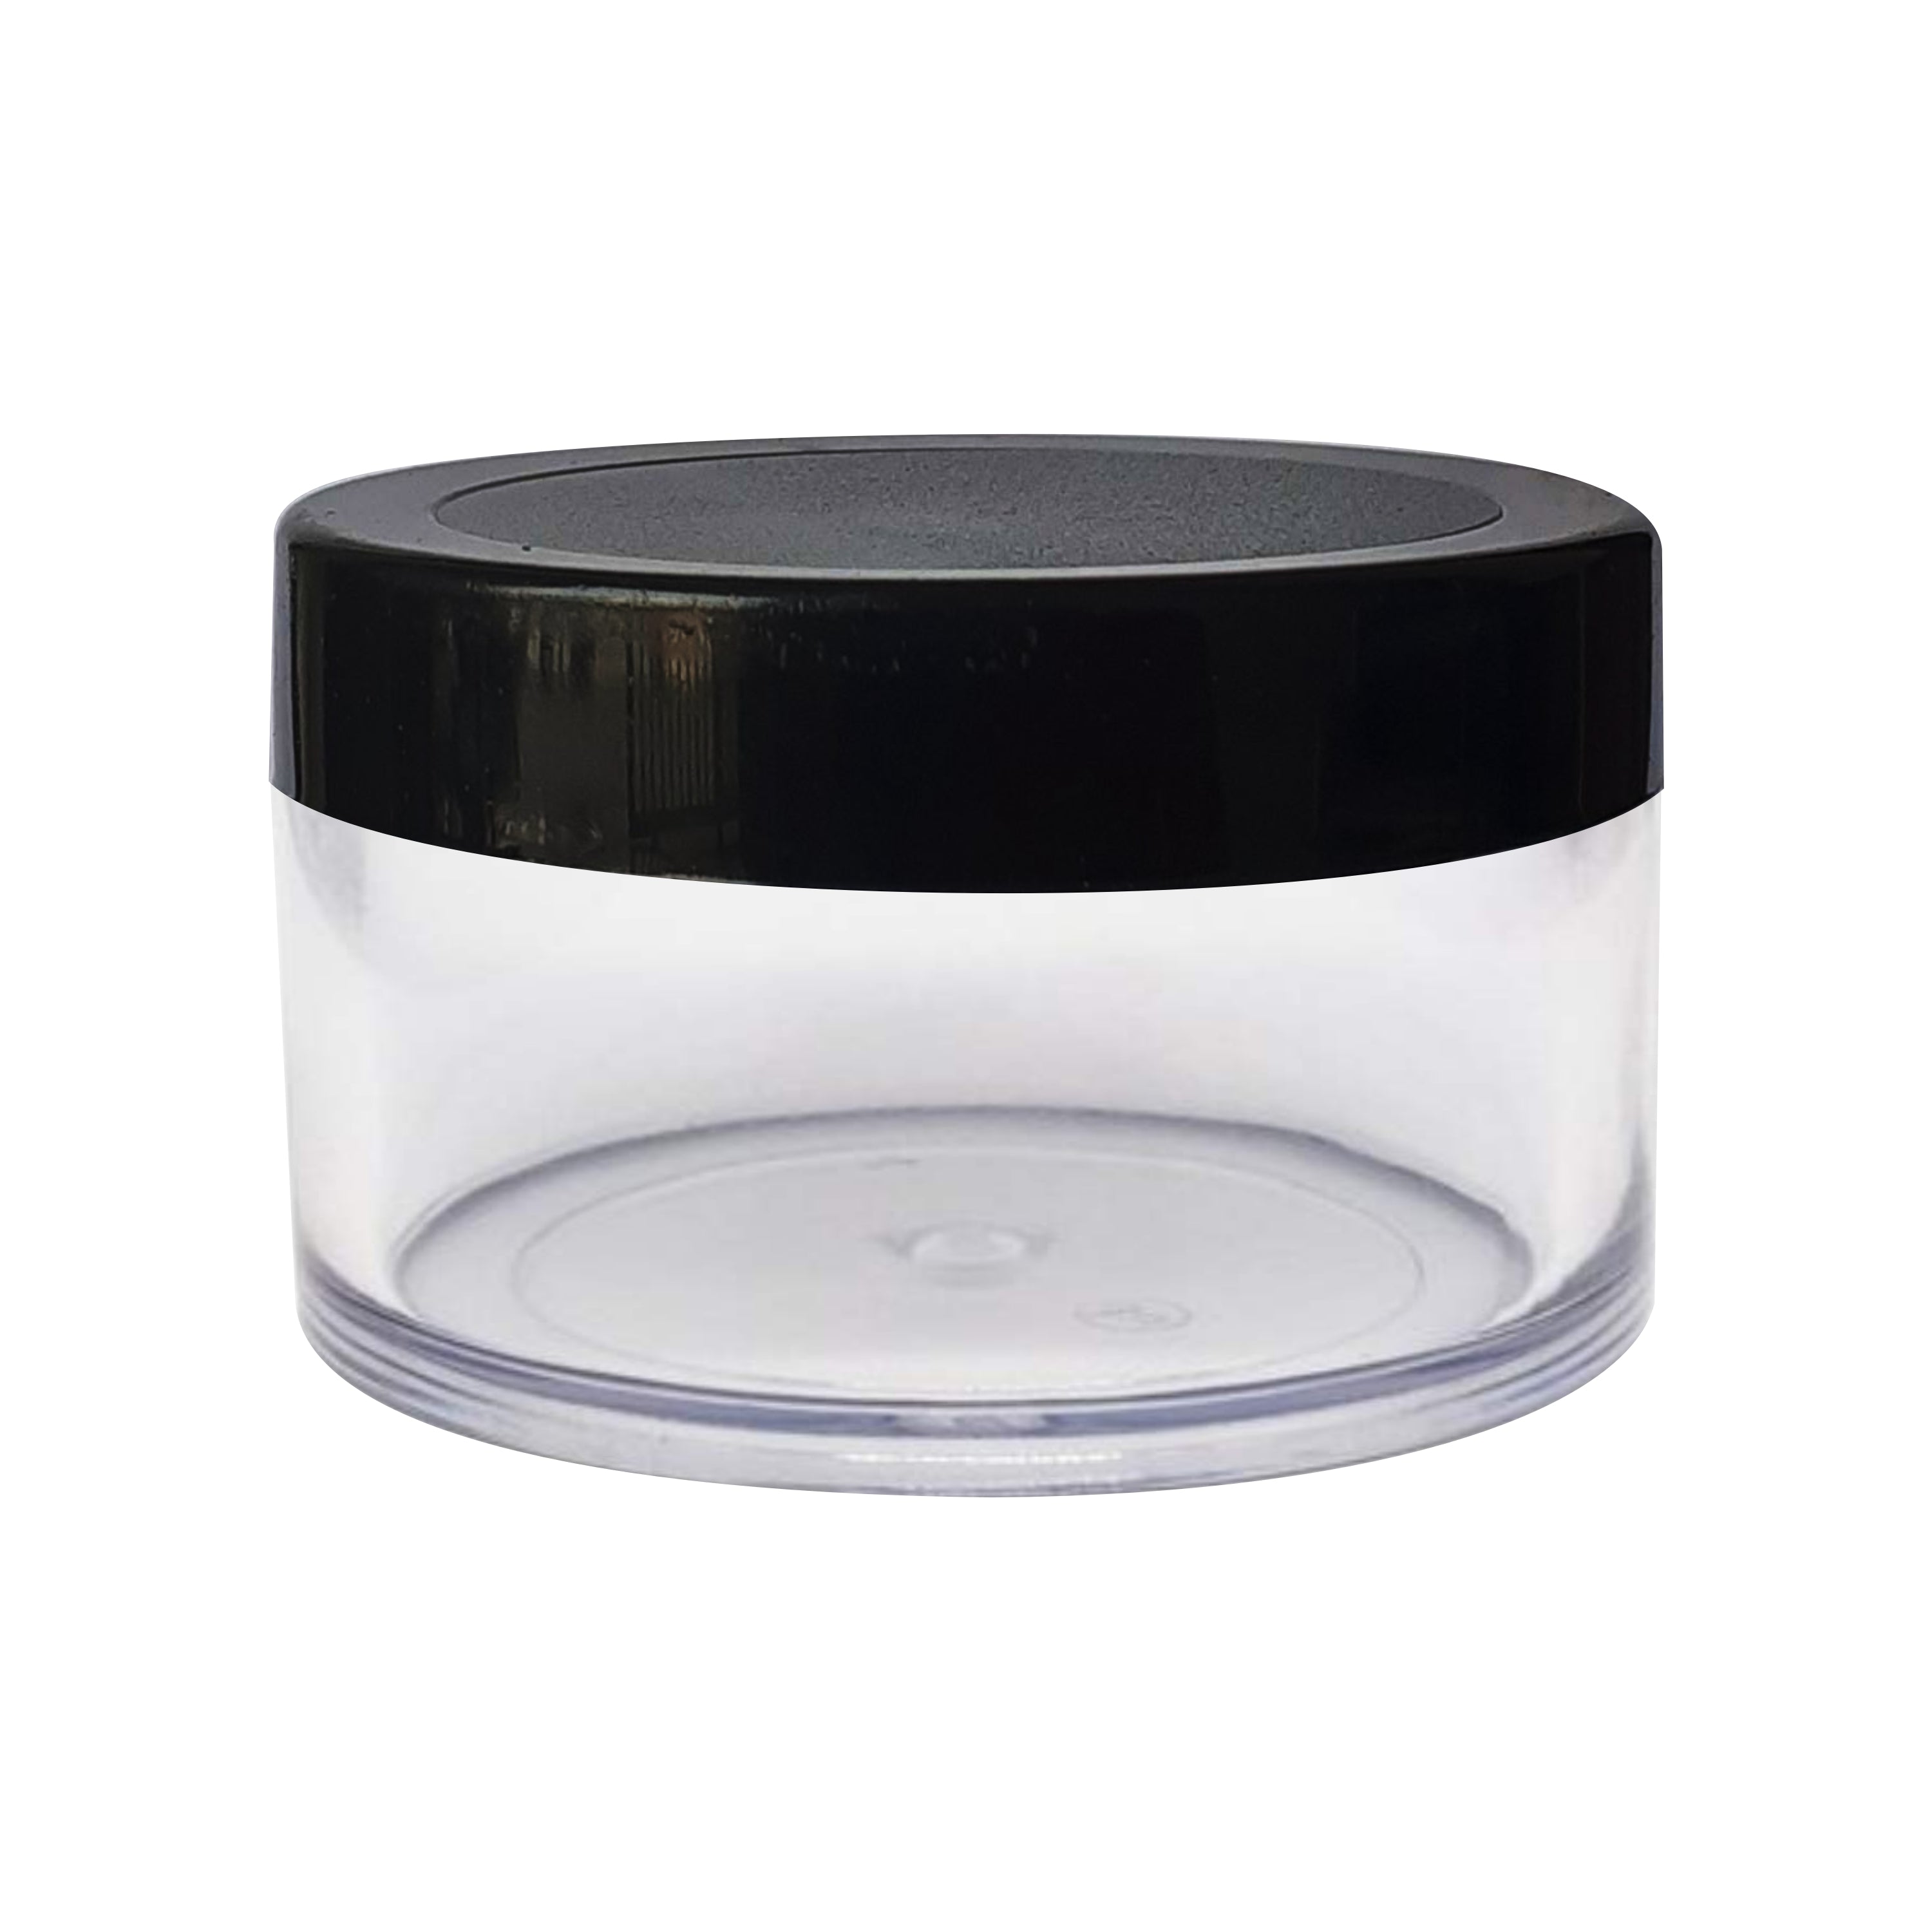 Acrylic Shan Jar with black lid- 8gm, 25gm, 30gm, 15gm, 50gm, 100gm [ZMJ02]